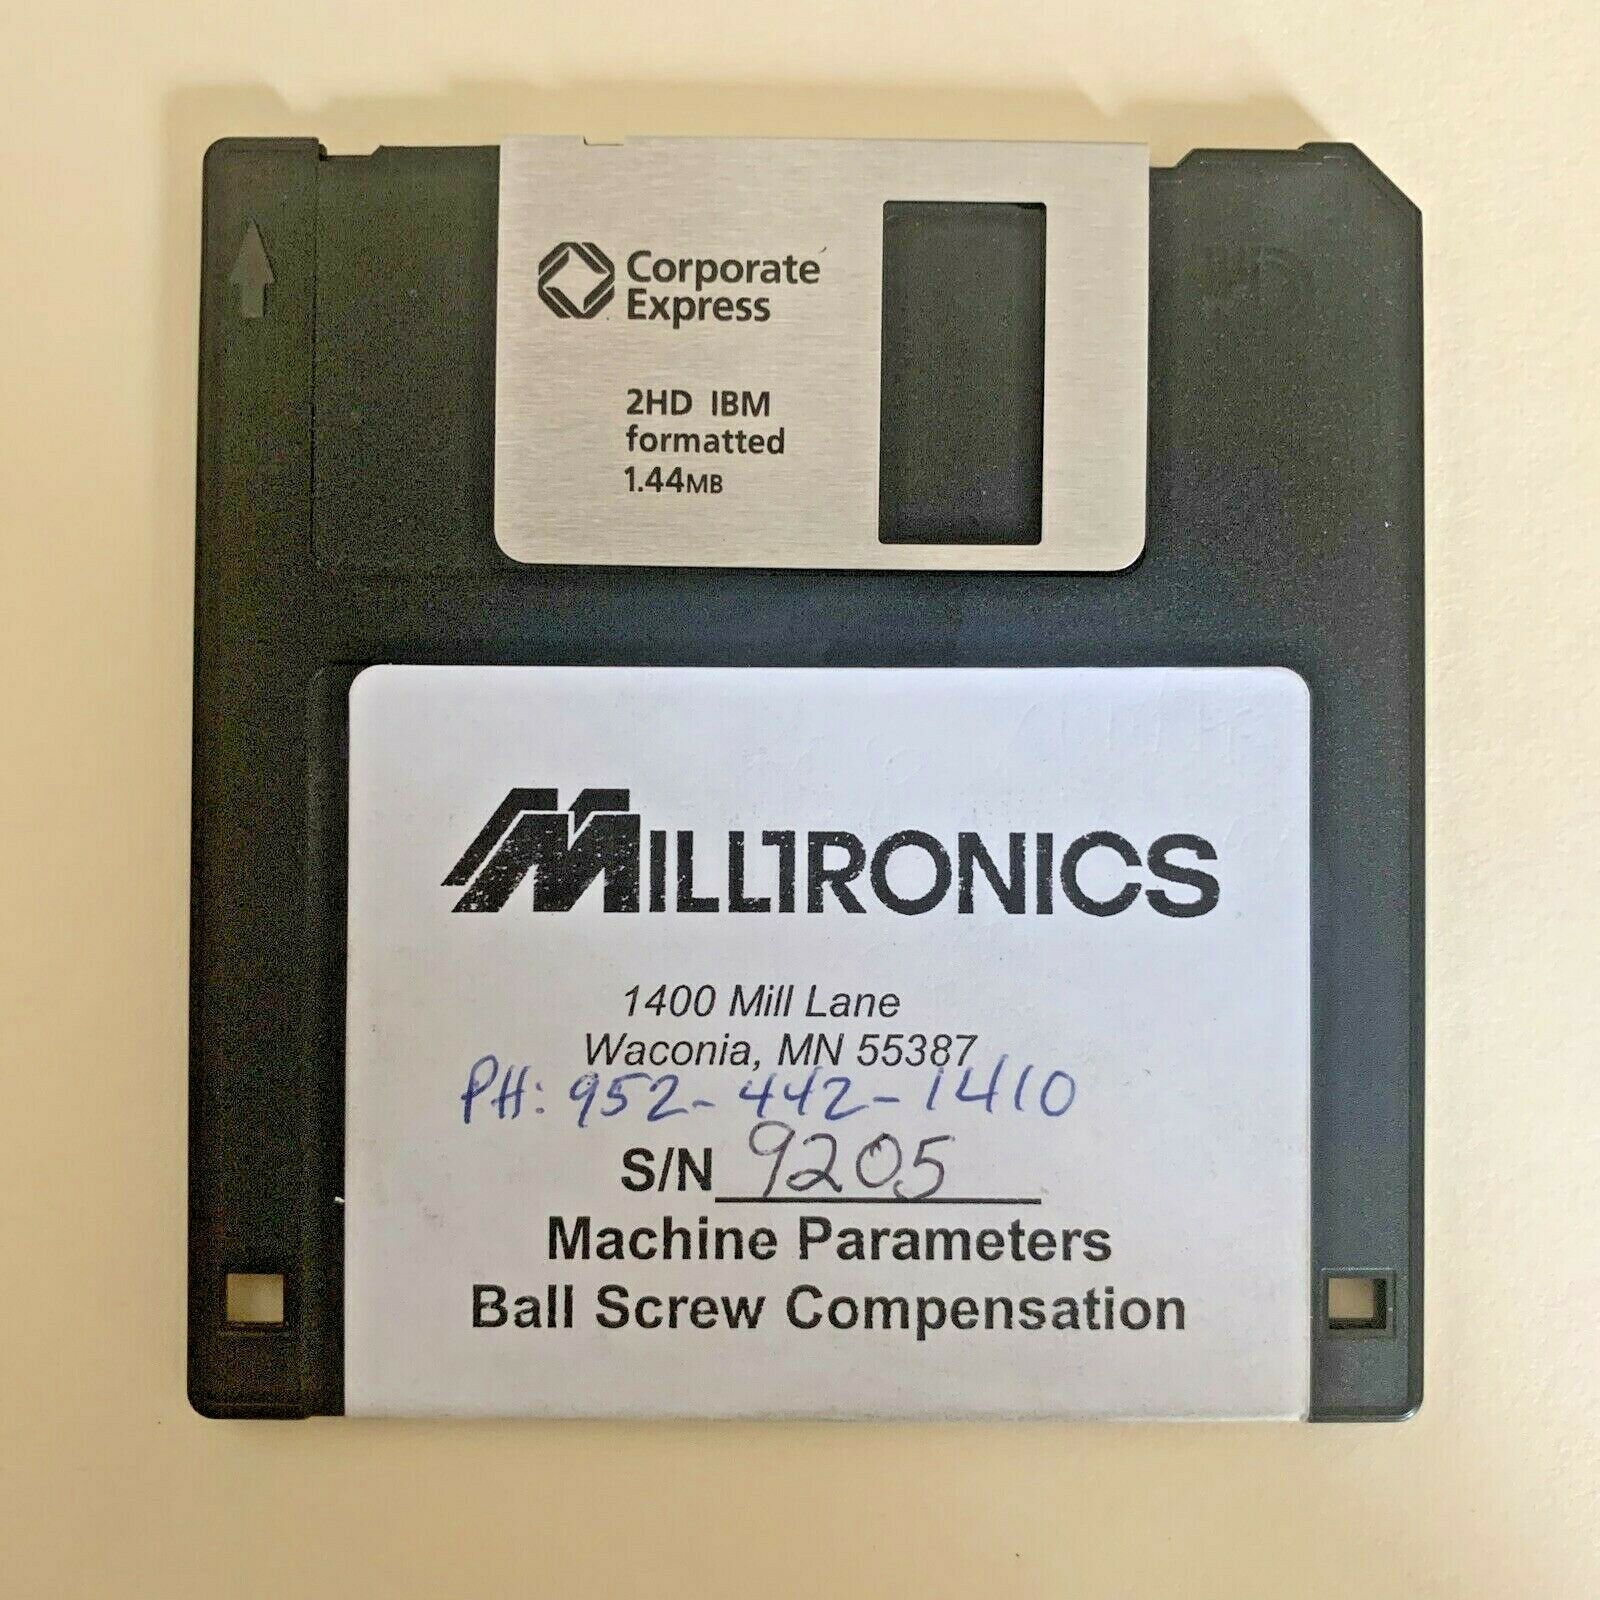 2006 Milltronics Vkm4 W/ Centurion 7 Control Parameters Floppy Disk - M221